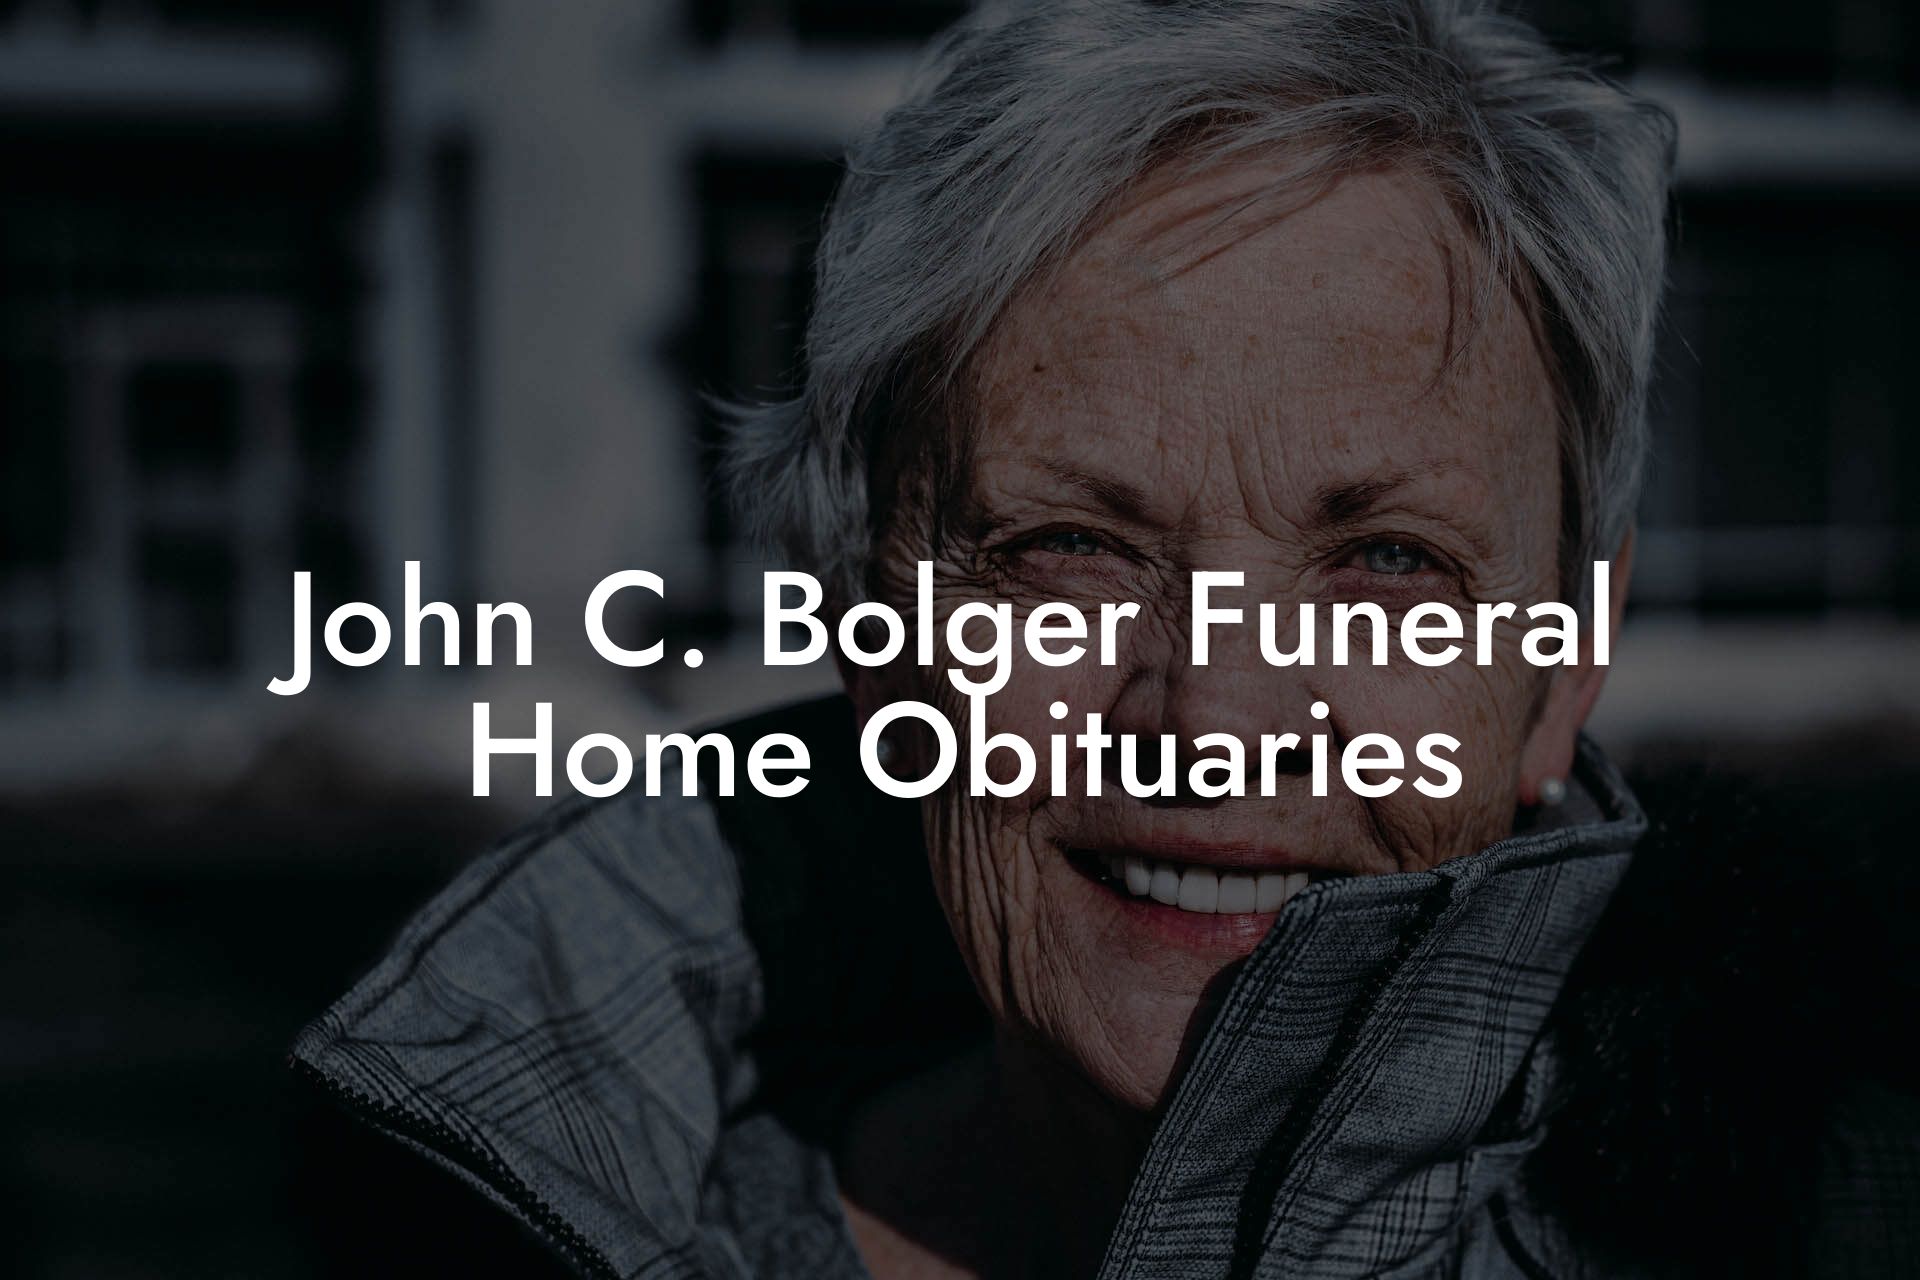 John C. Bolger Funeral Home Obituaries